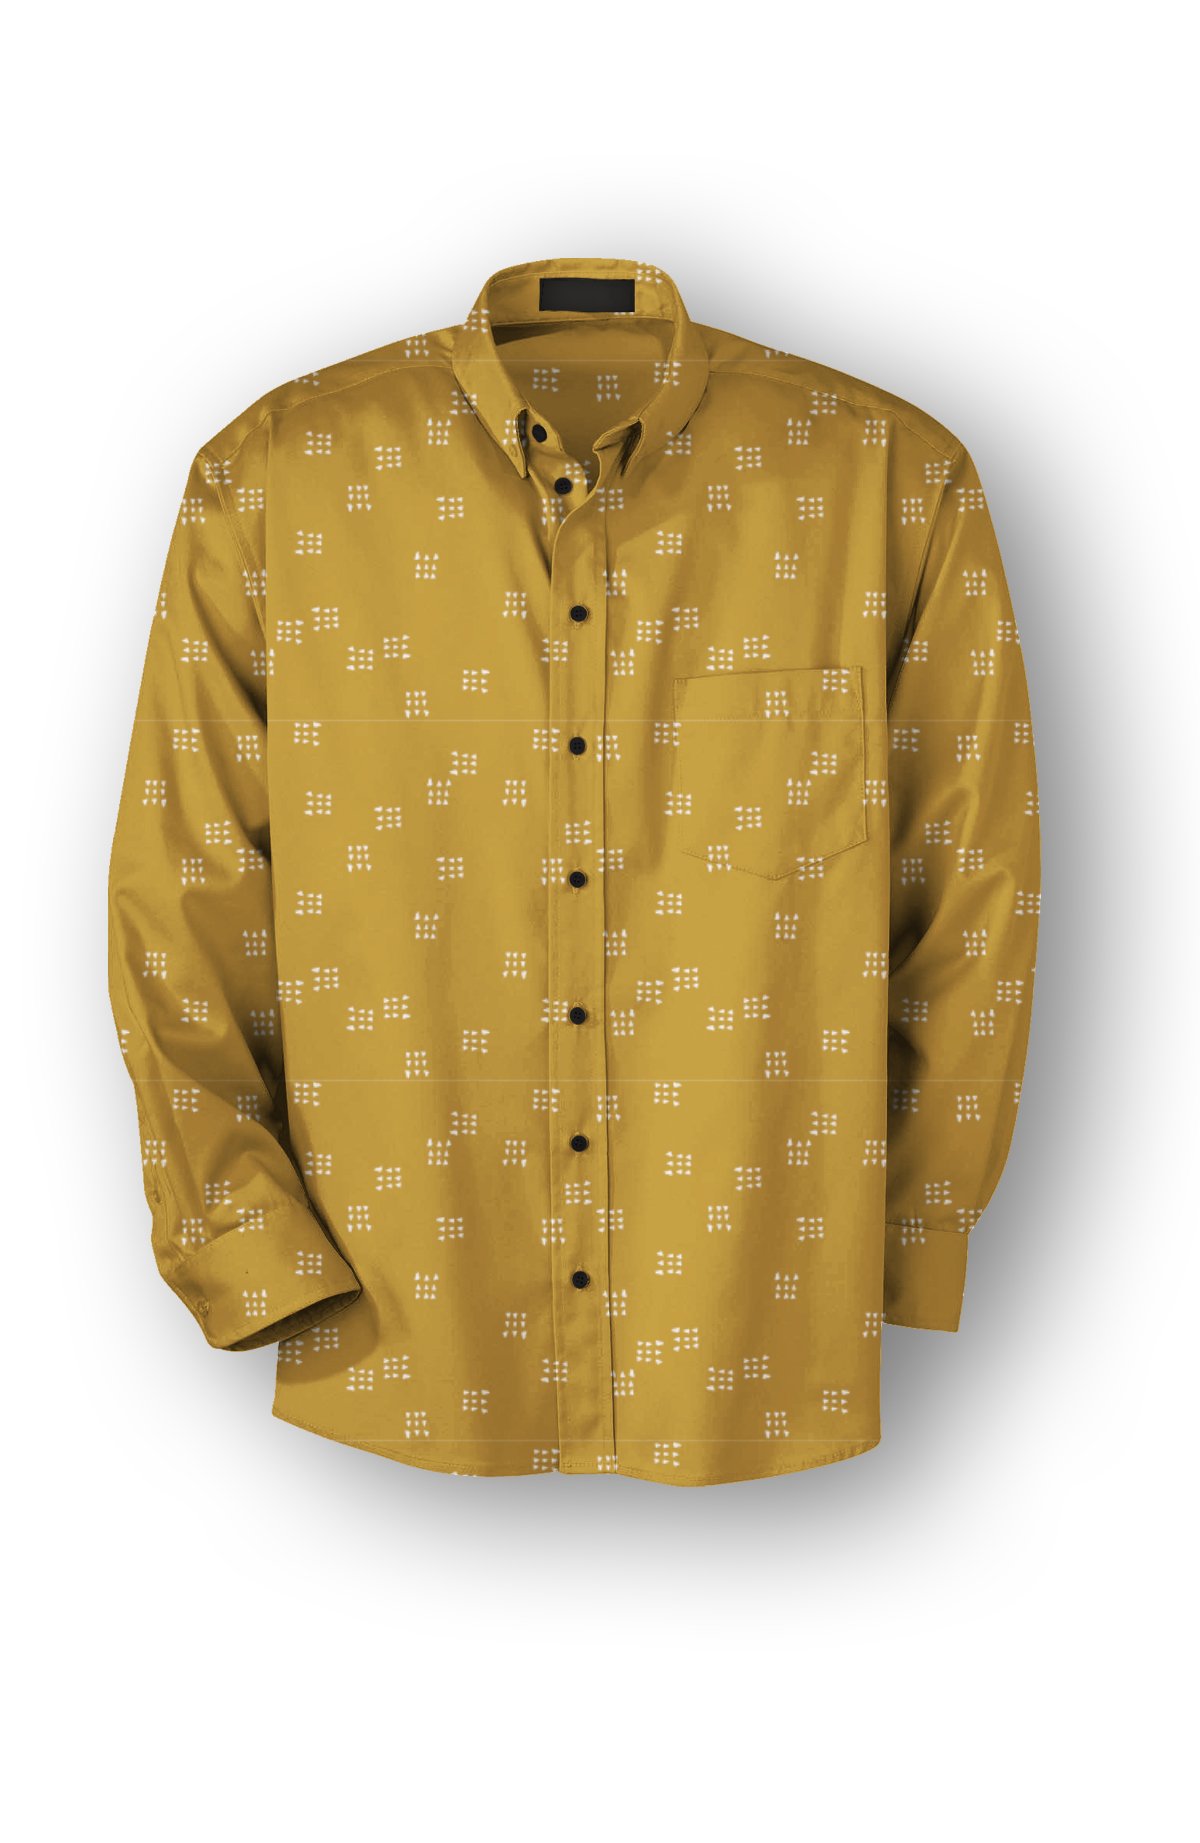 Man's shirt Celestial fabrics - Zen Chic.JPG